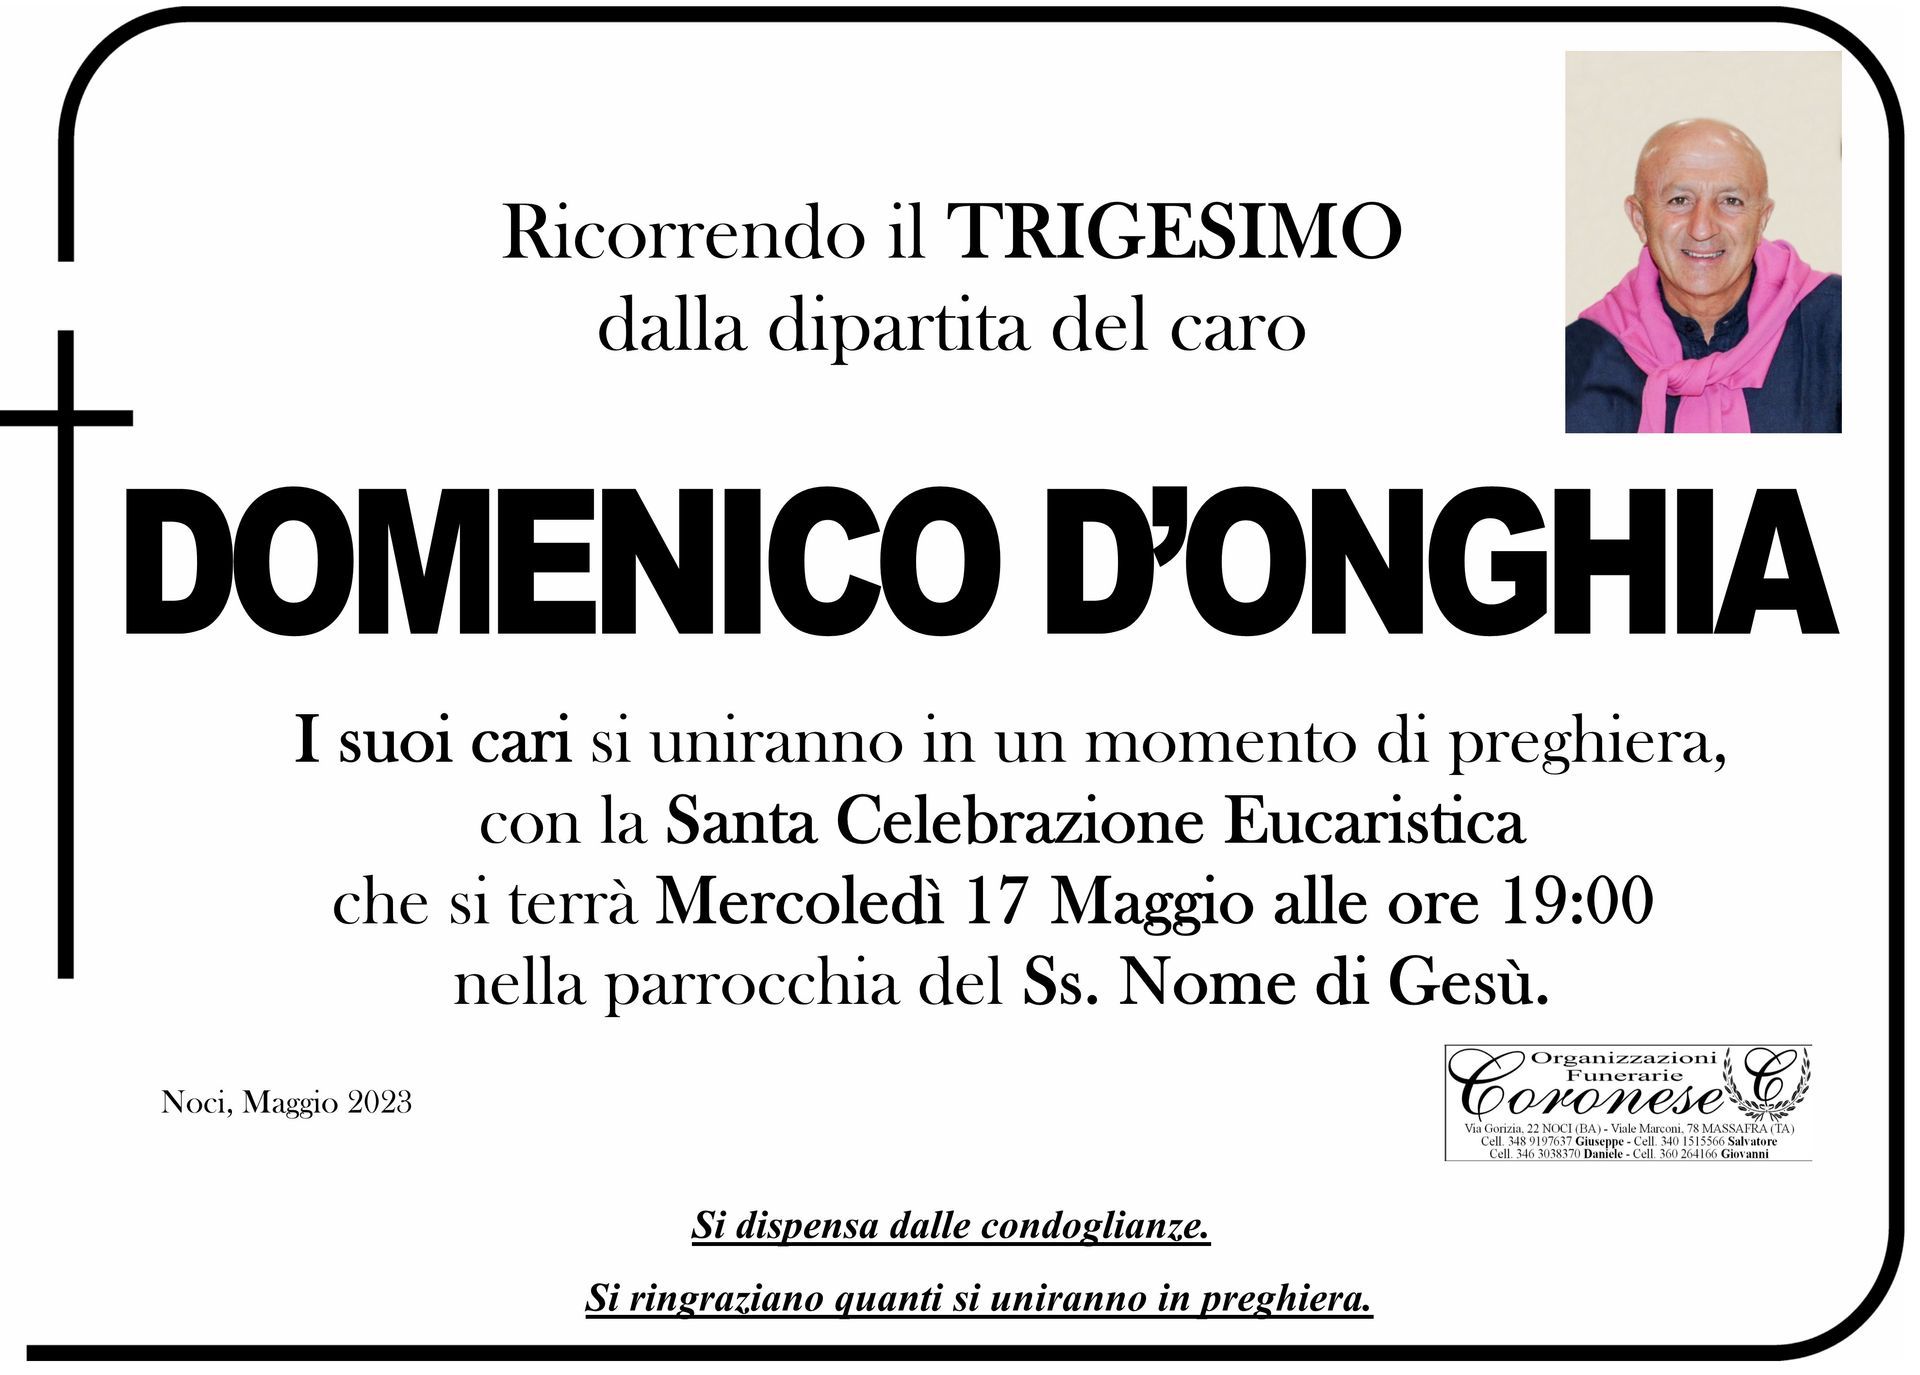 necrologio DOMENICO D'ONGHIA